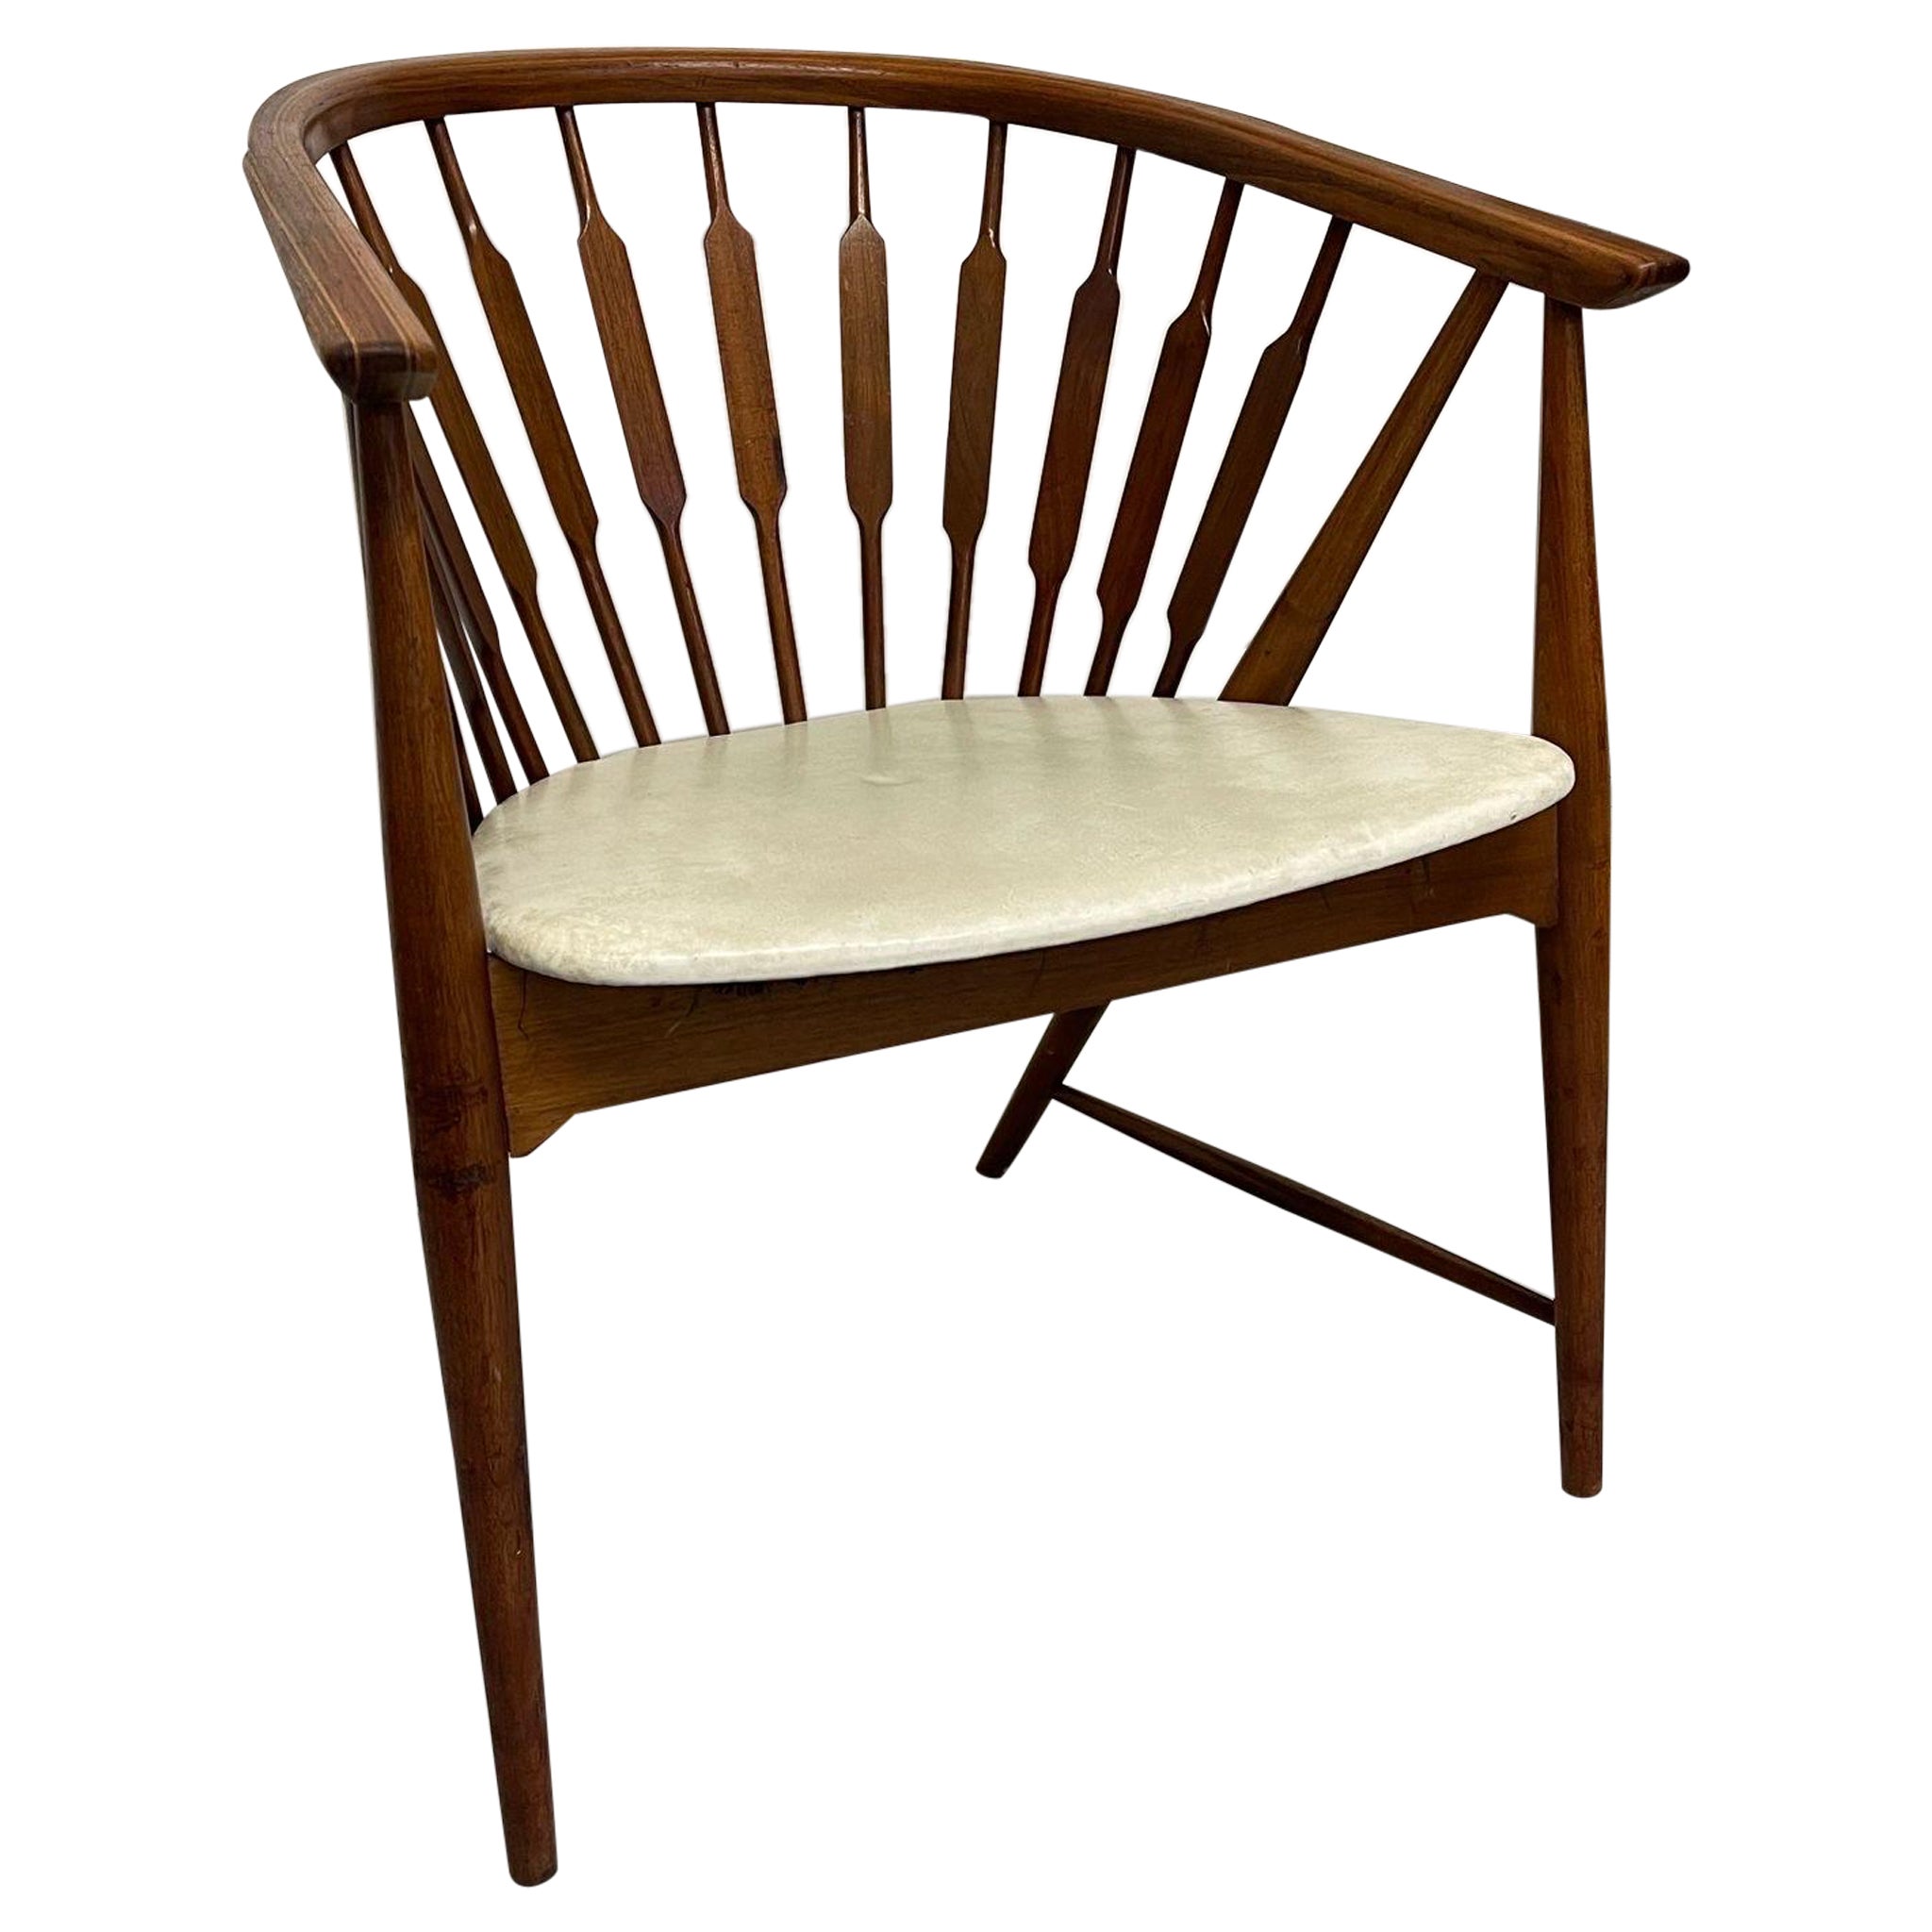 Vintage Mid Century Modern Spindled Drexel Declaration Captain's Chair.